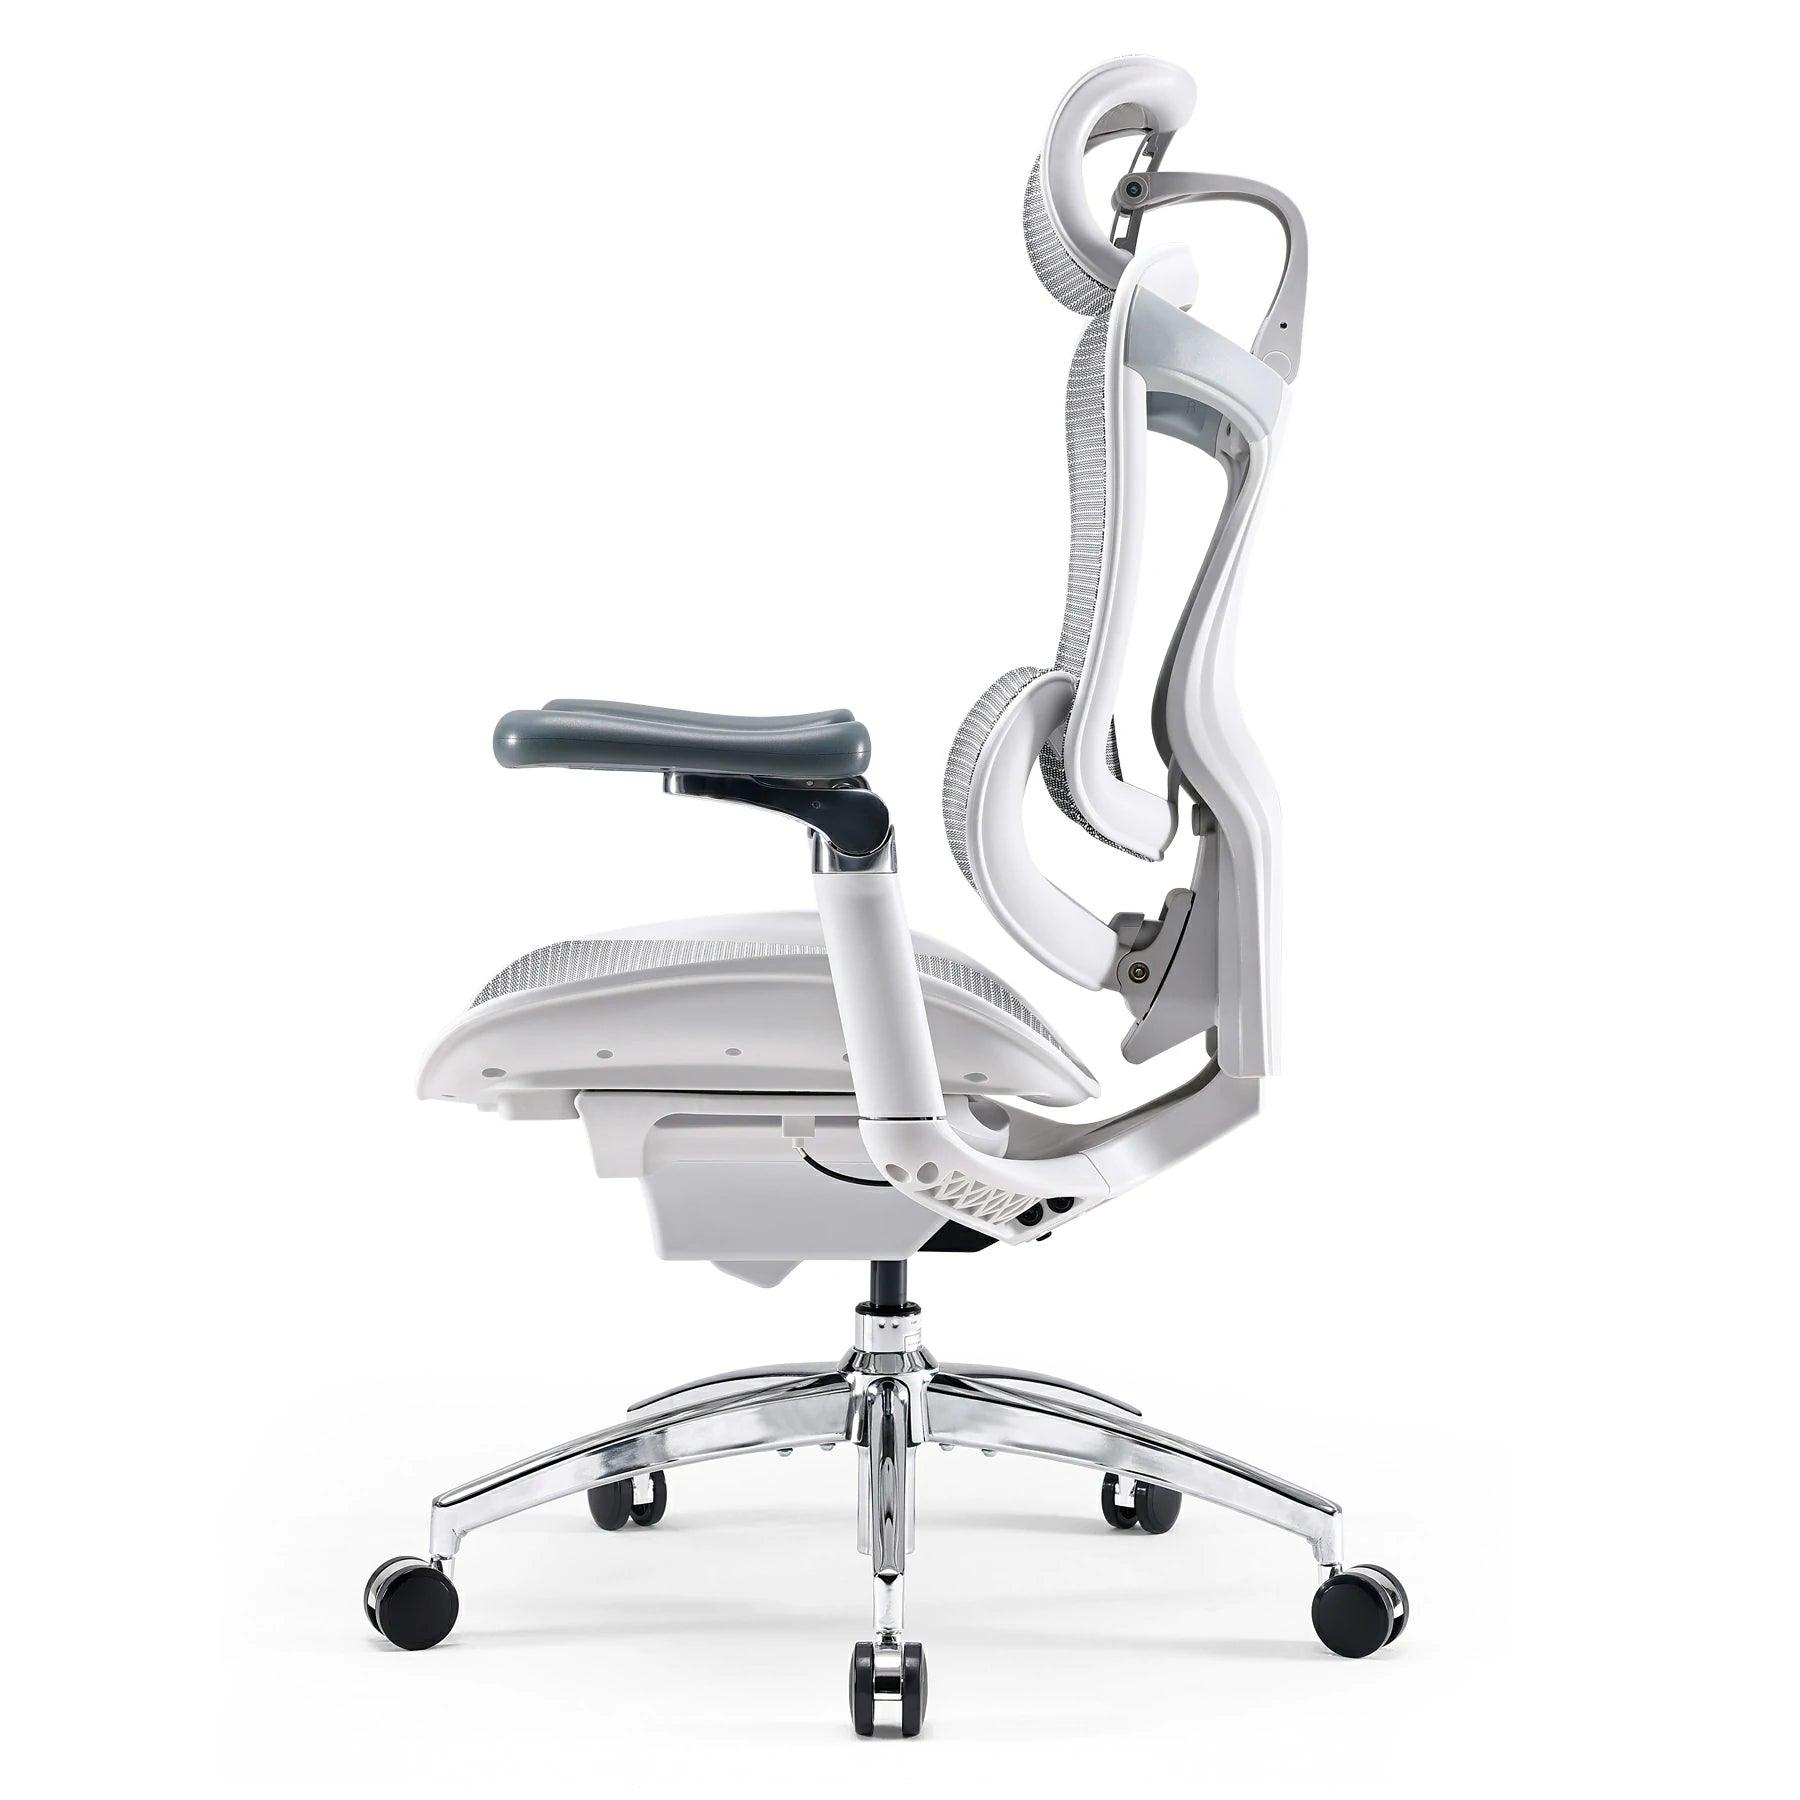 Sihoo Doro C300 Ergonomic Office Chair review: specs, cost